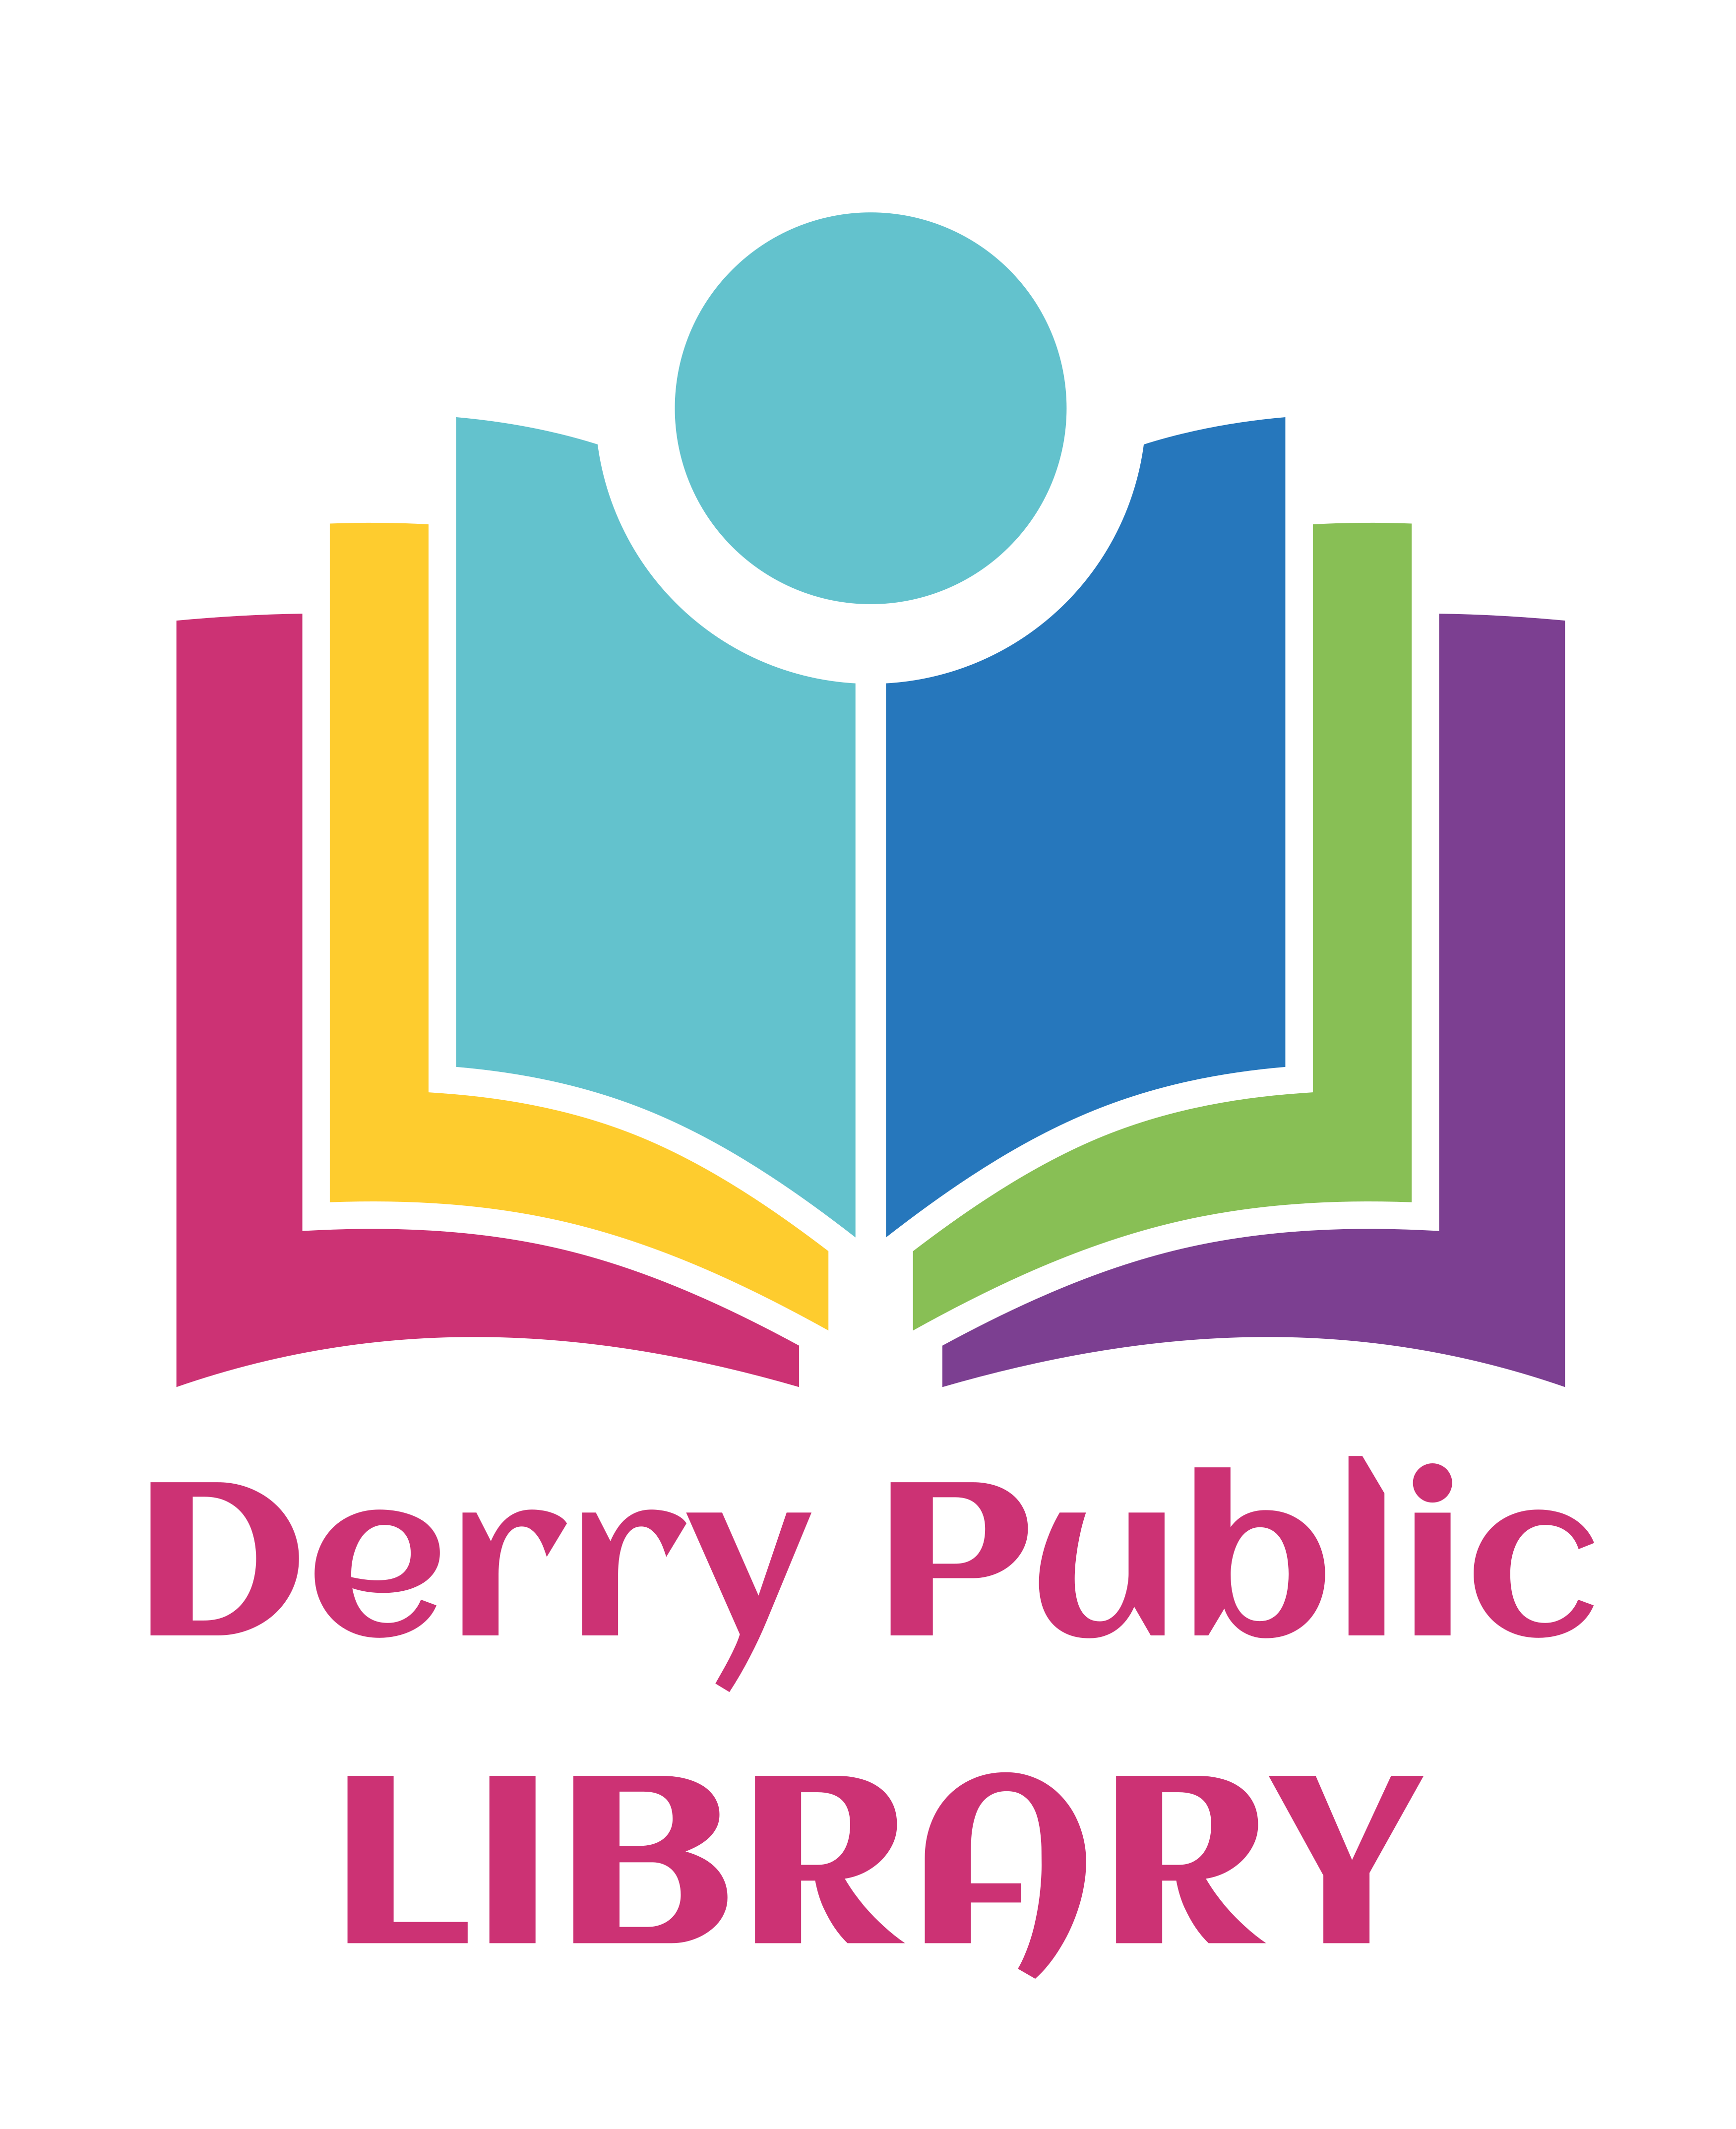 Derry Public Library